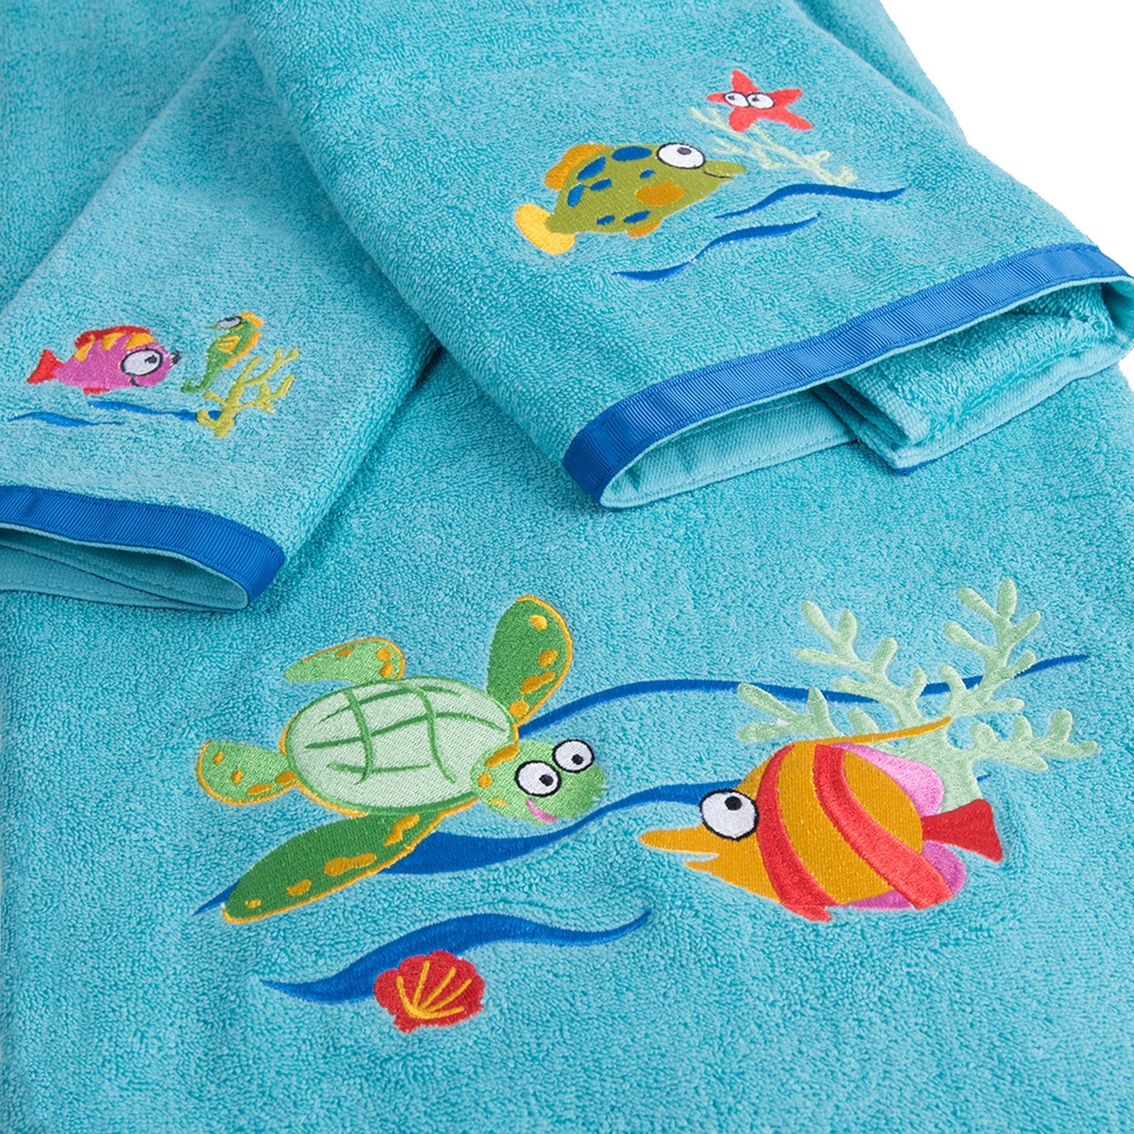 Allure Fish Tails 3 pc. Towel Set - Image 2 of 3